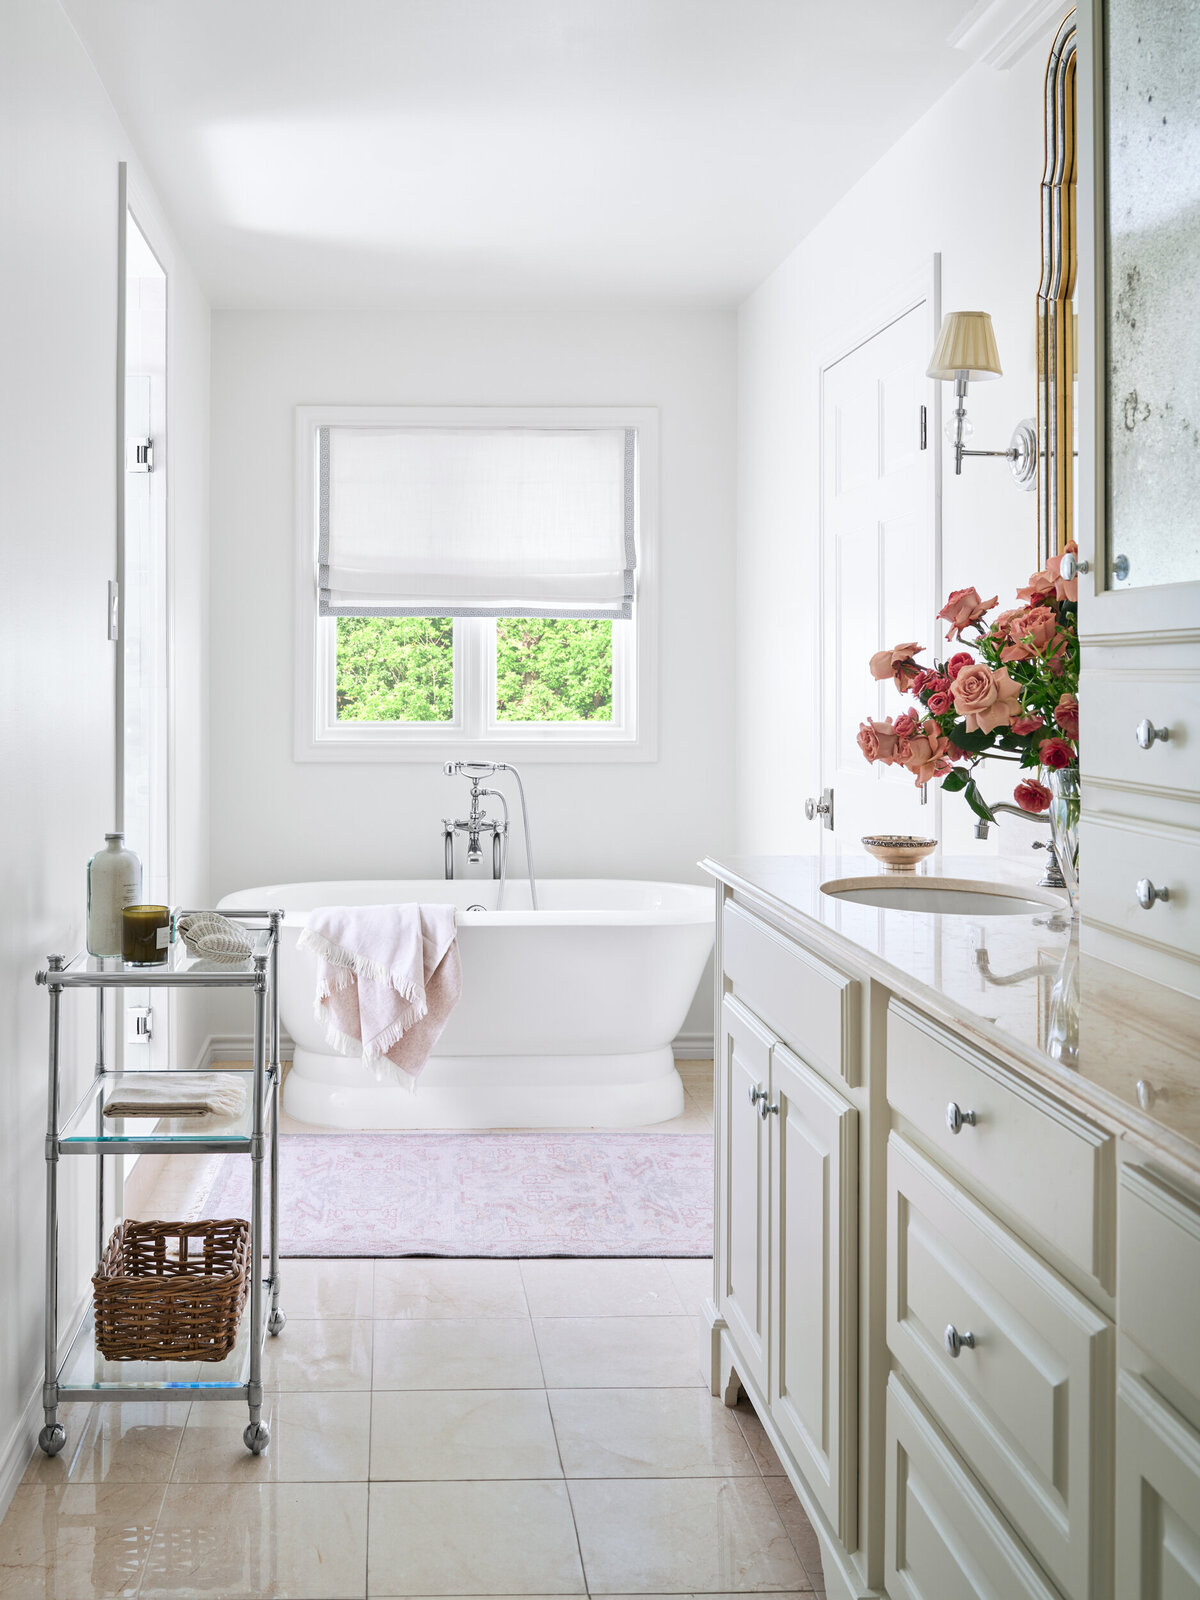 Freestanding Tub, Roman Shade, Bathroom  View, White Cabinets